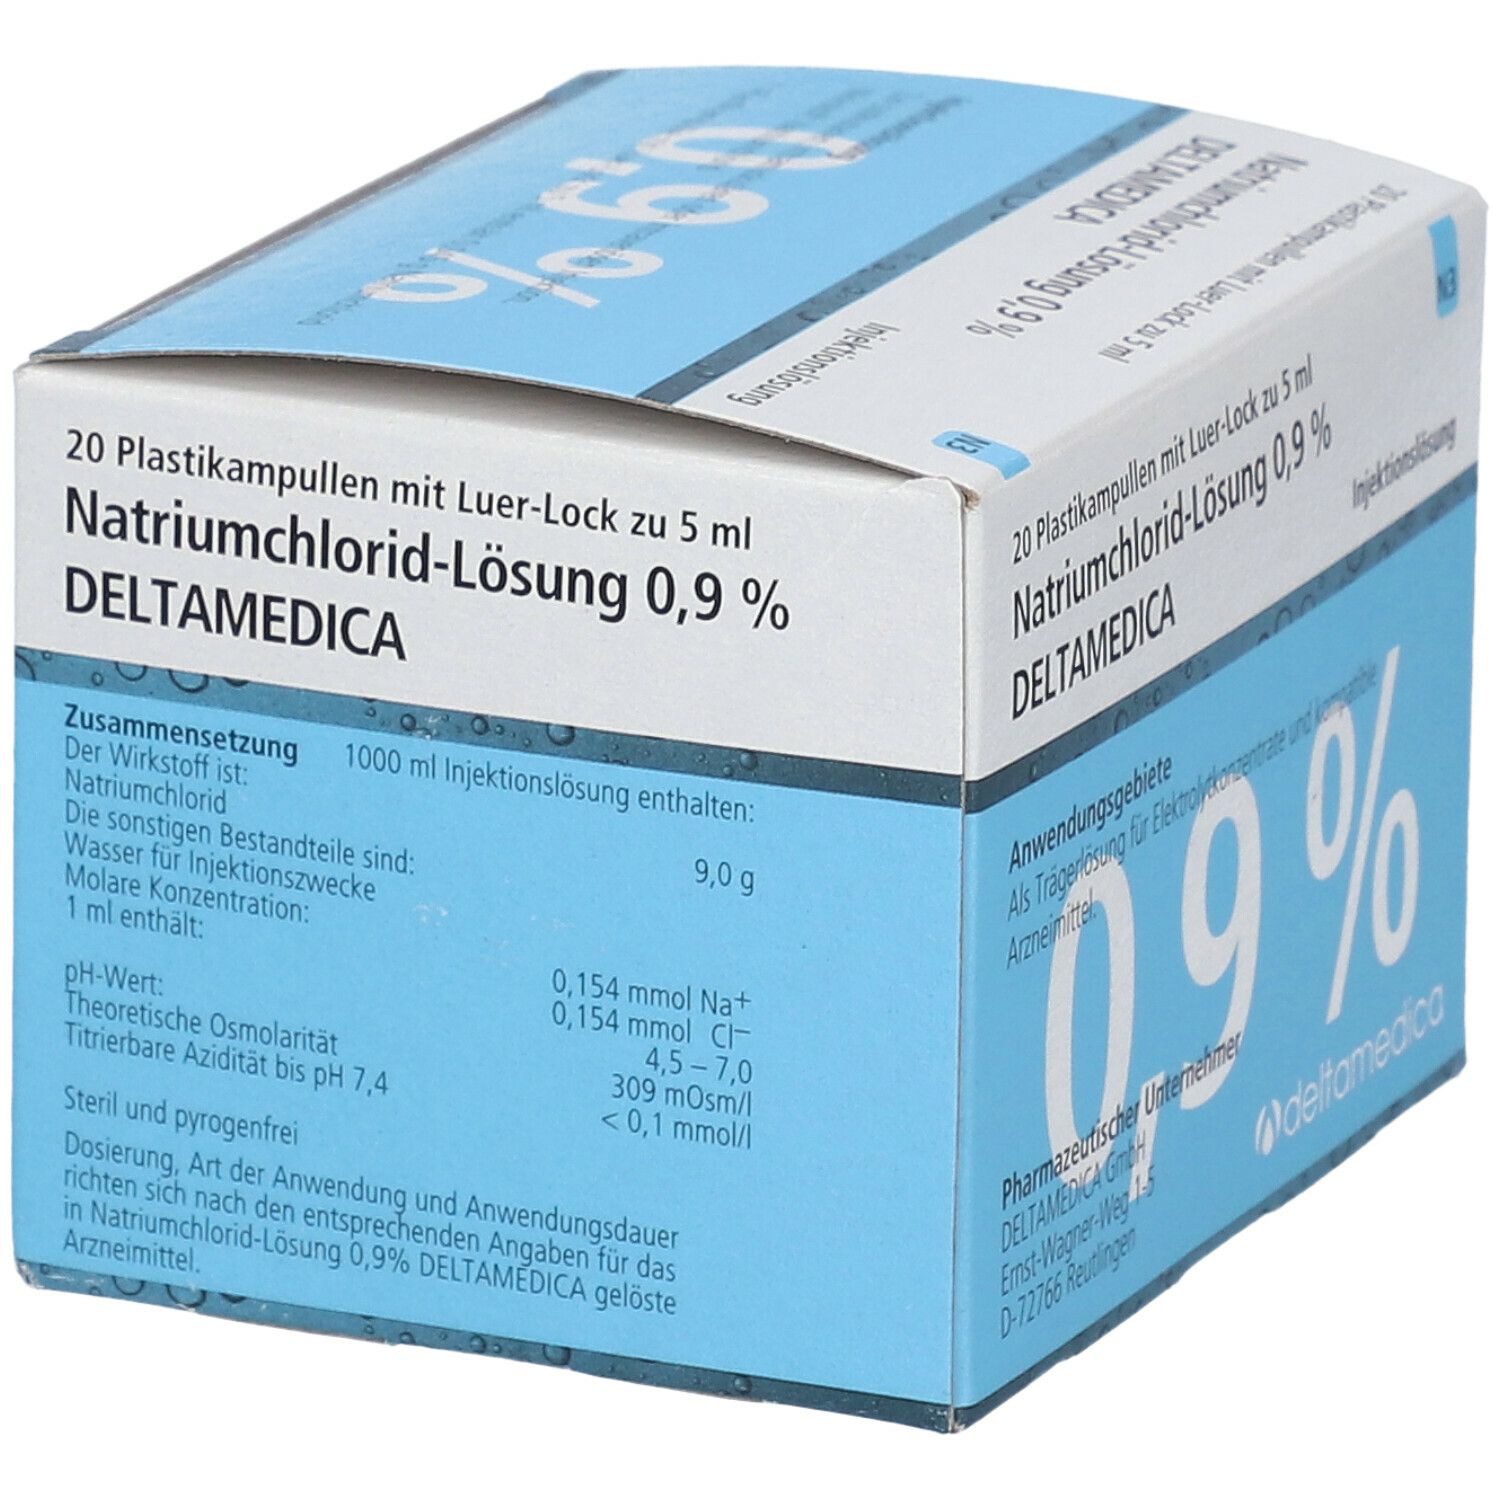 Isotonische Natriumchlorid-Lösung 0,9 % DELTAMEDICA